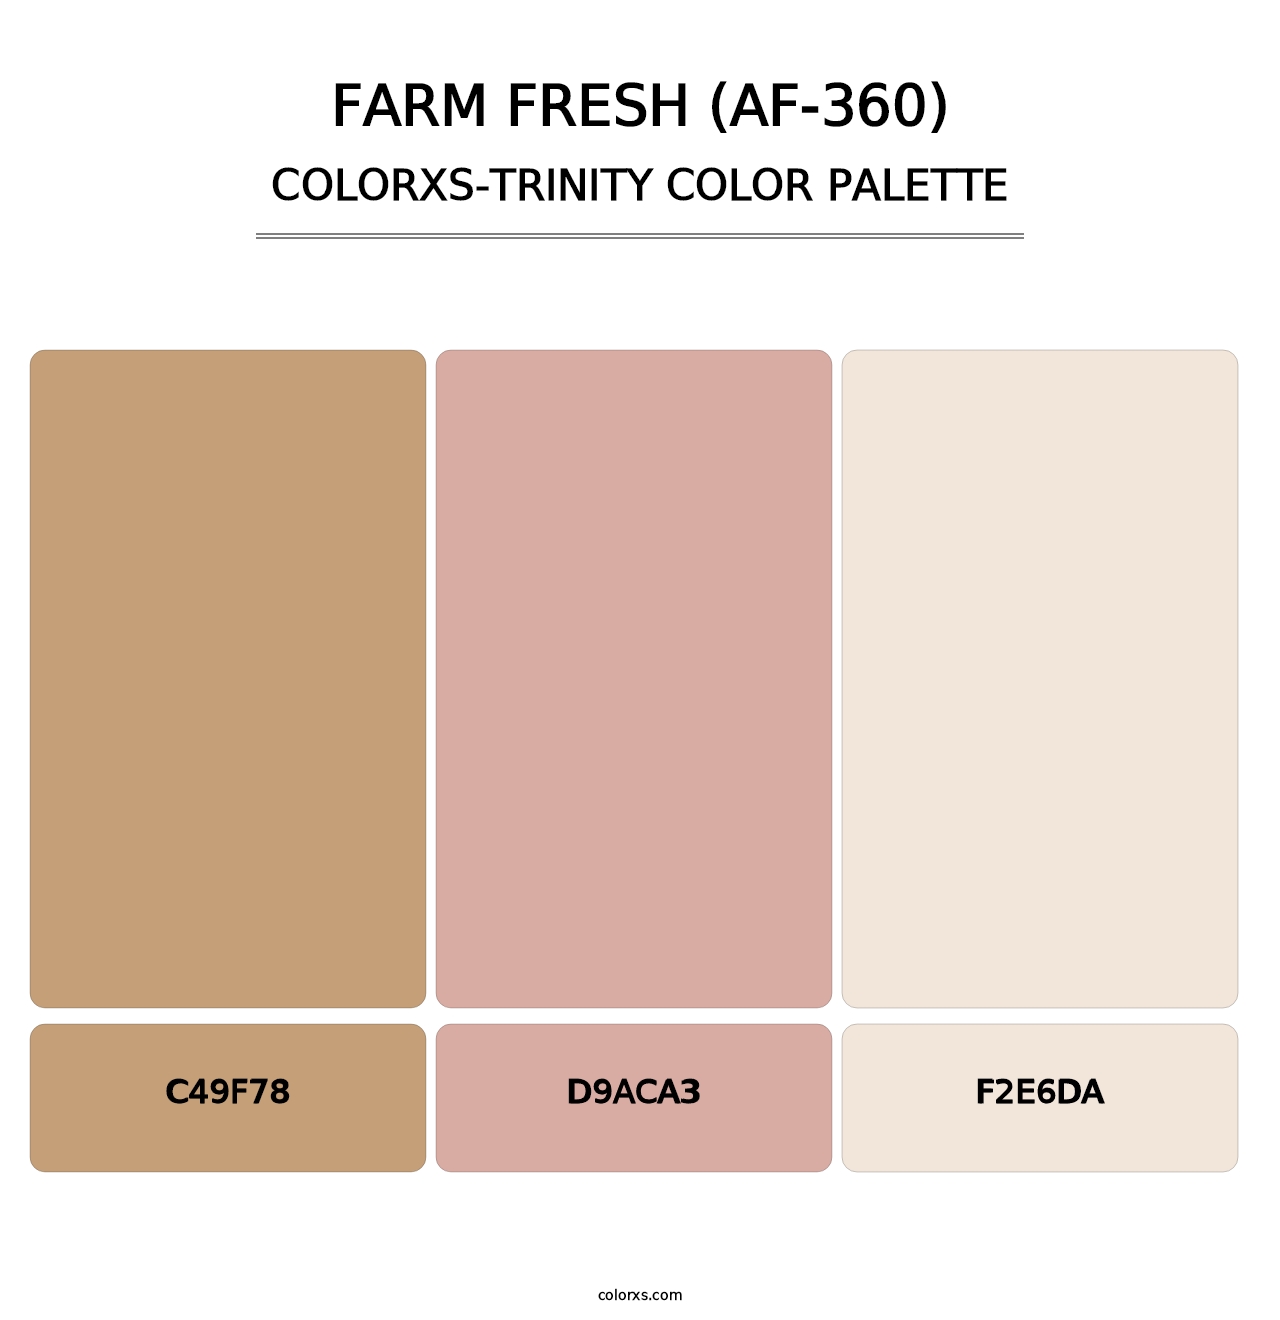 Farm Fresh (AF-360) - Colorxs Trinity Palette